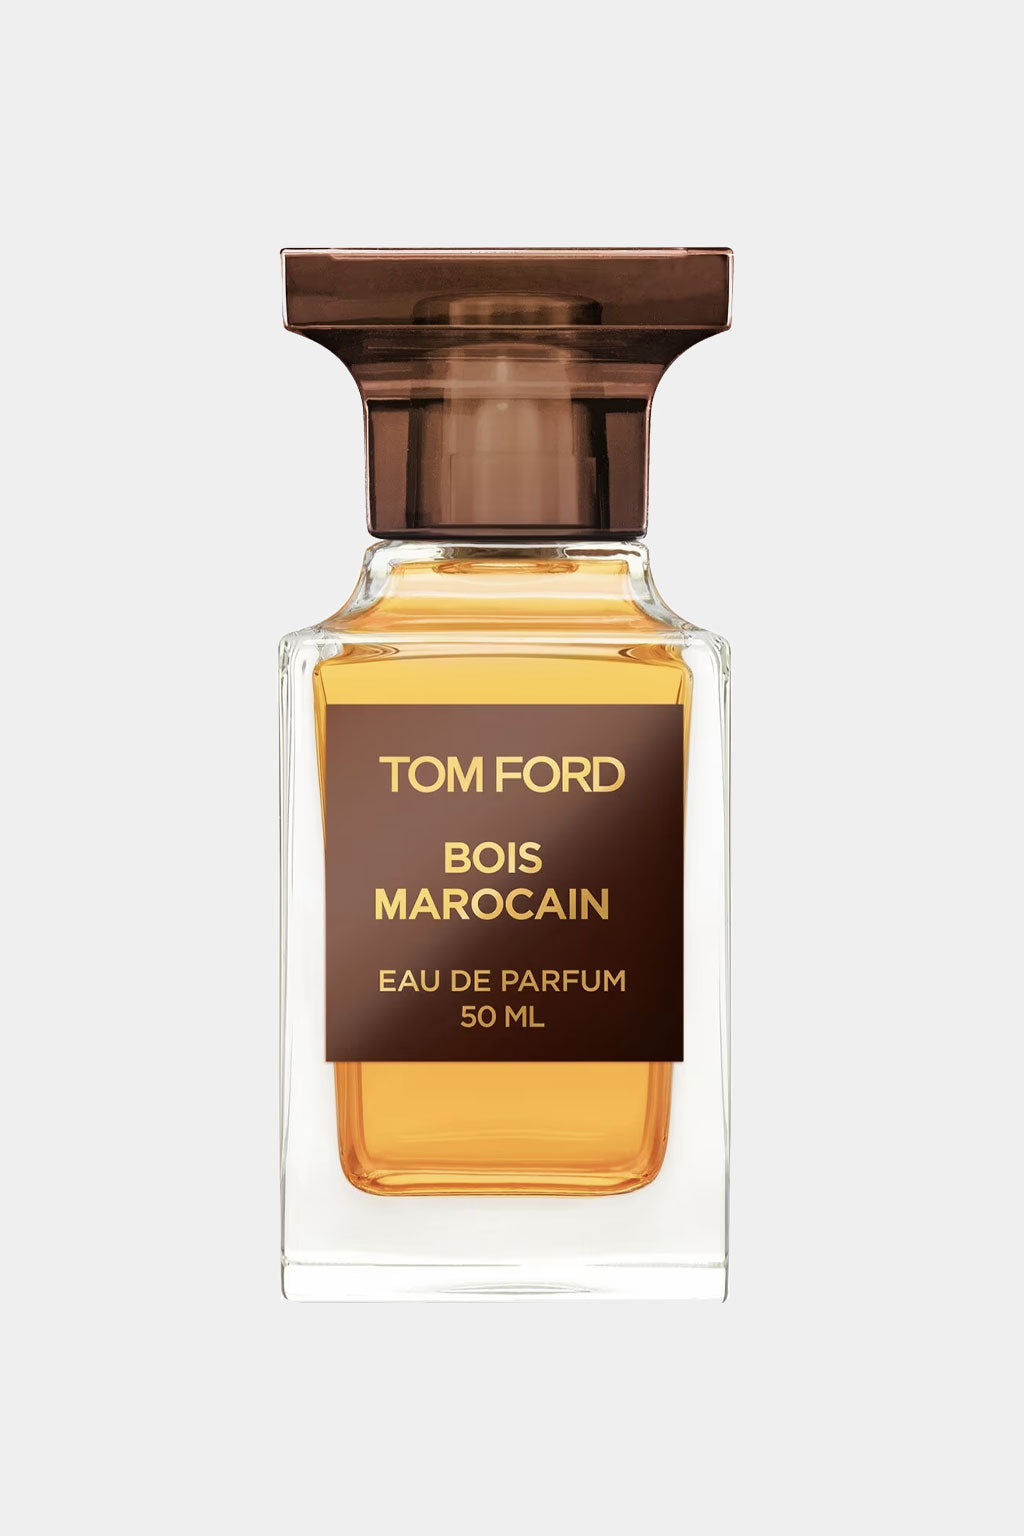 Tom Ford - Bois Marocain Eau de Parfum